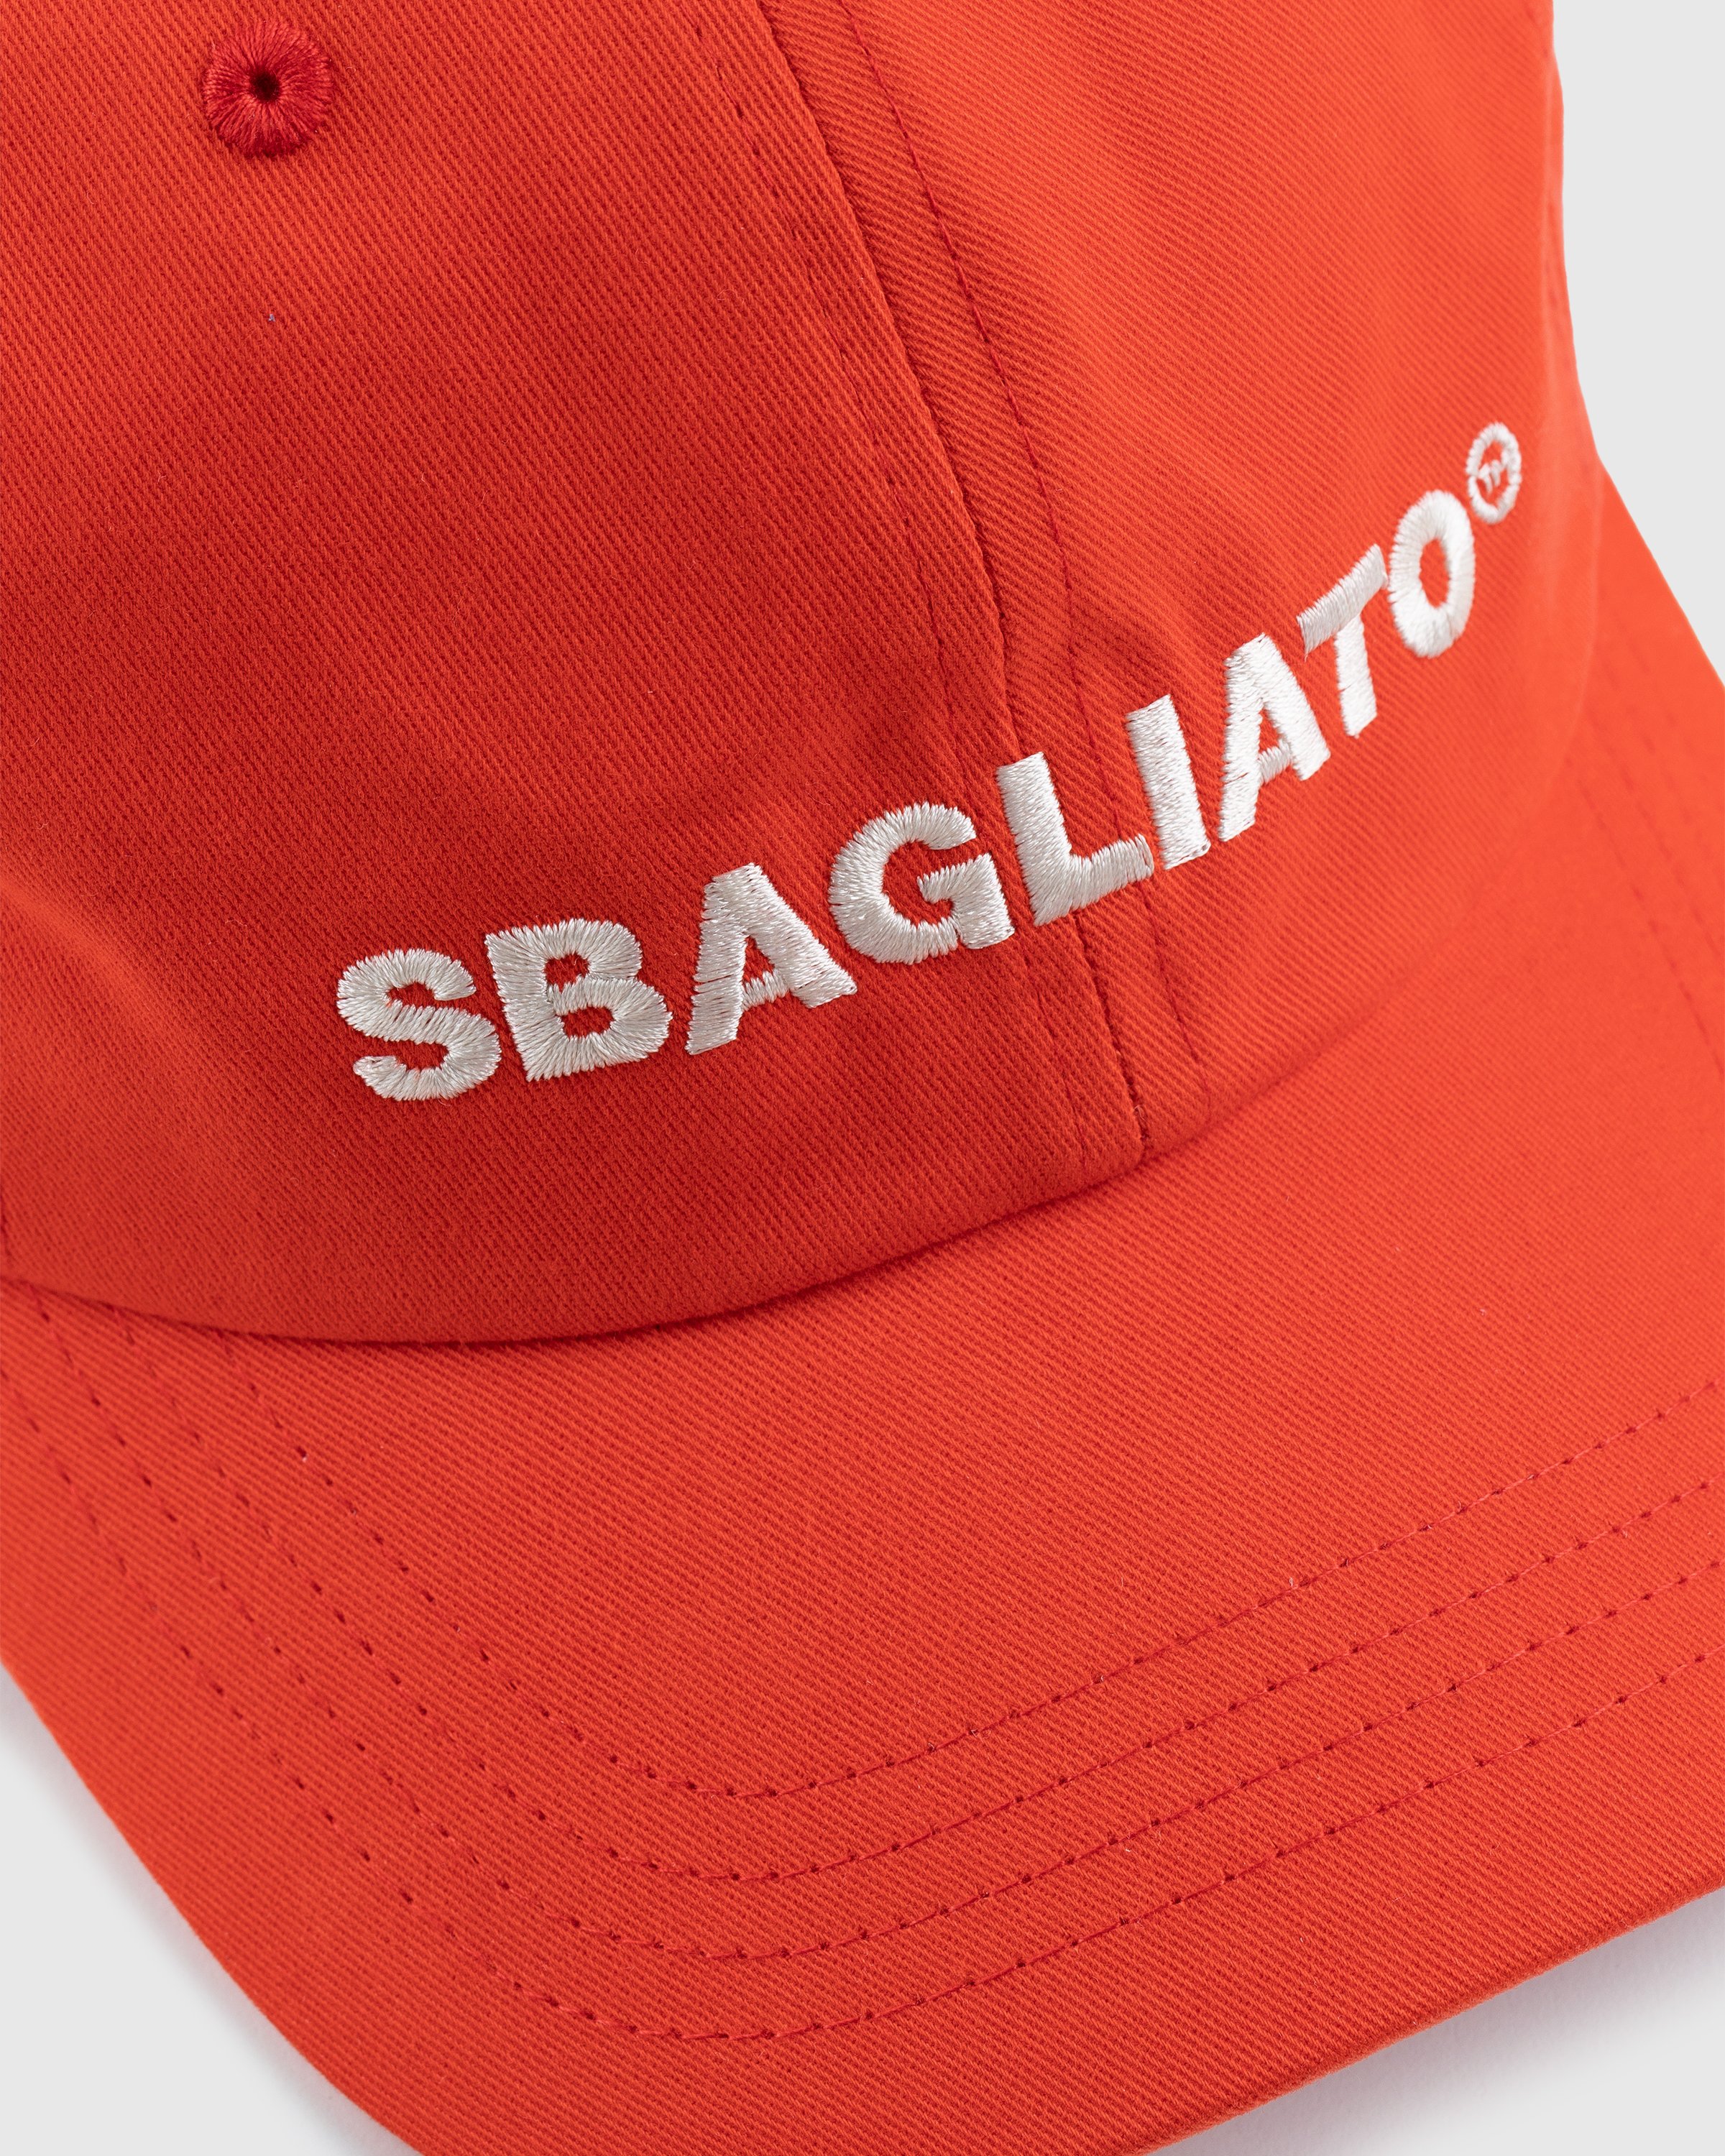 Bar Basso x Highsnobiety - Sbagliato Cap Red - Accessories - Red - Image 6